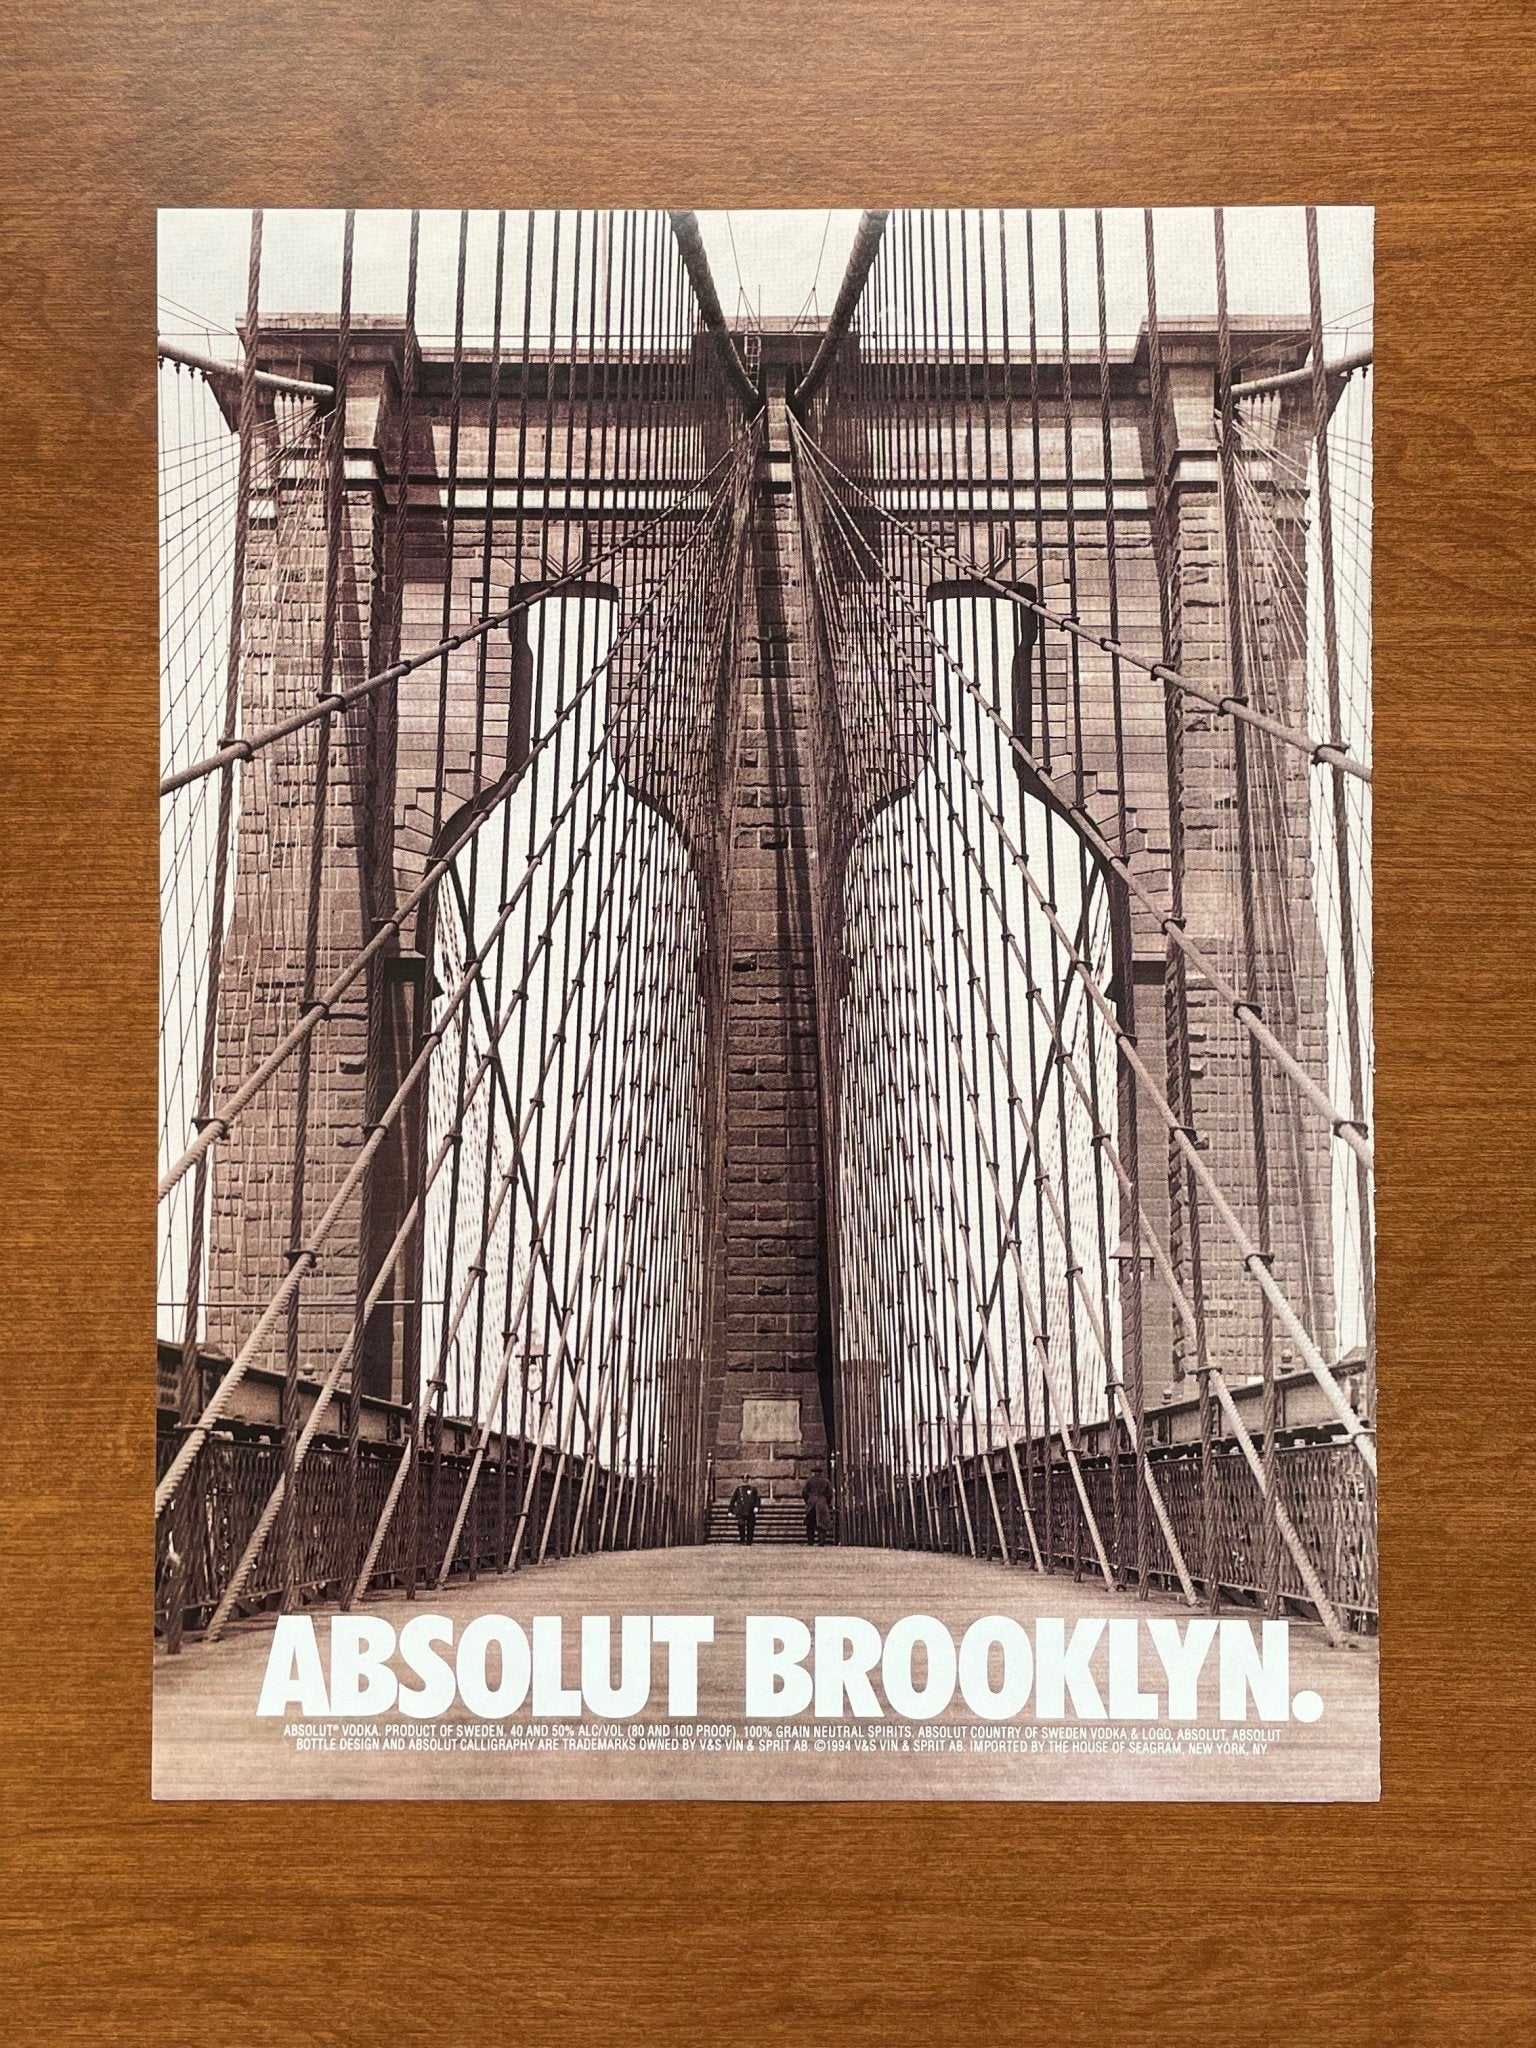 Absolut Brooklyn. Advertisement